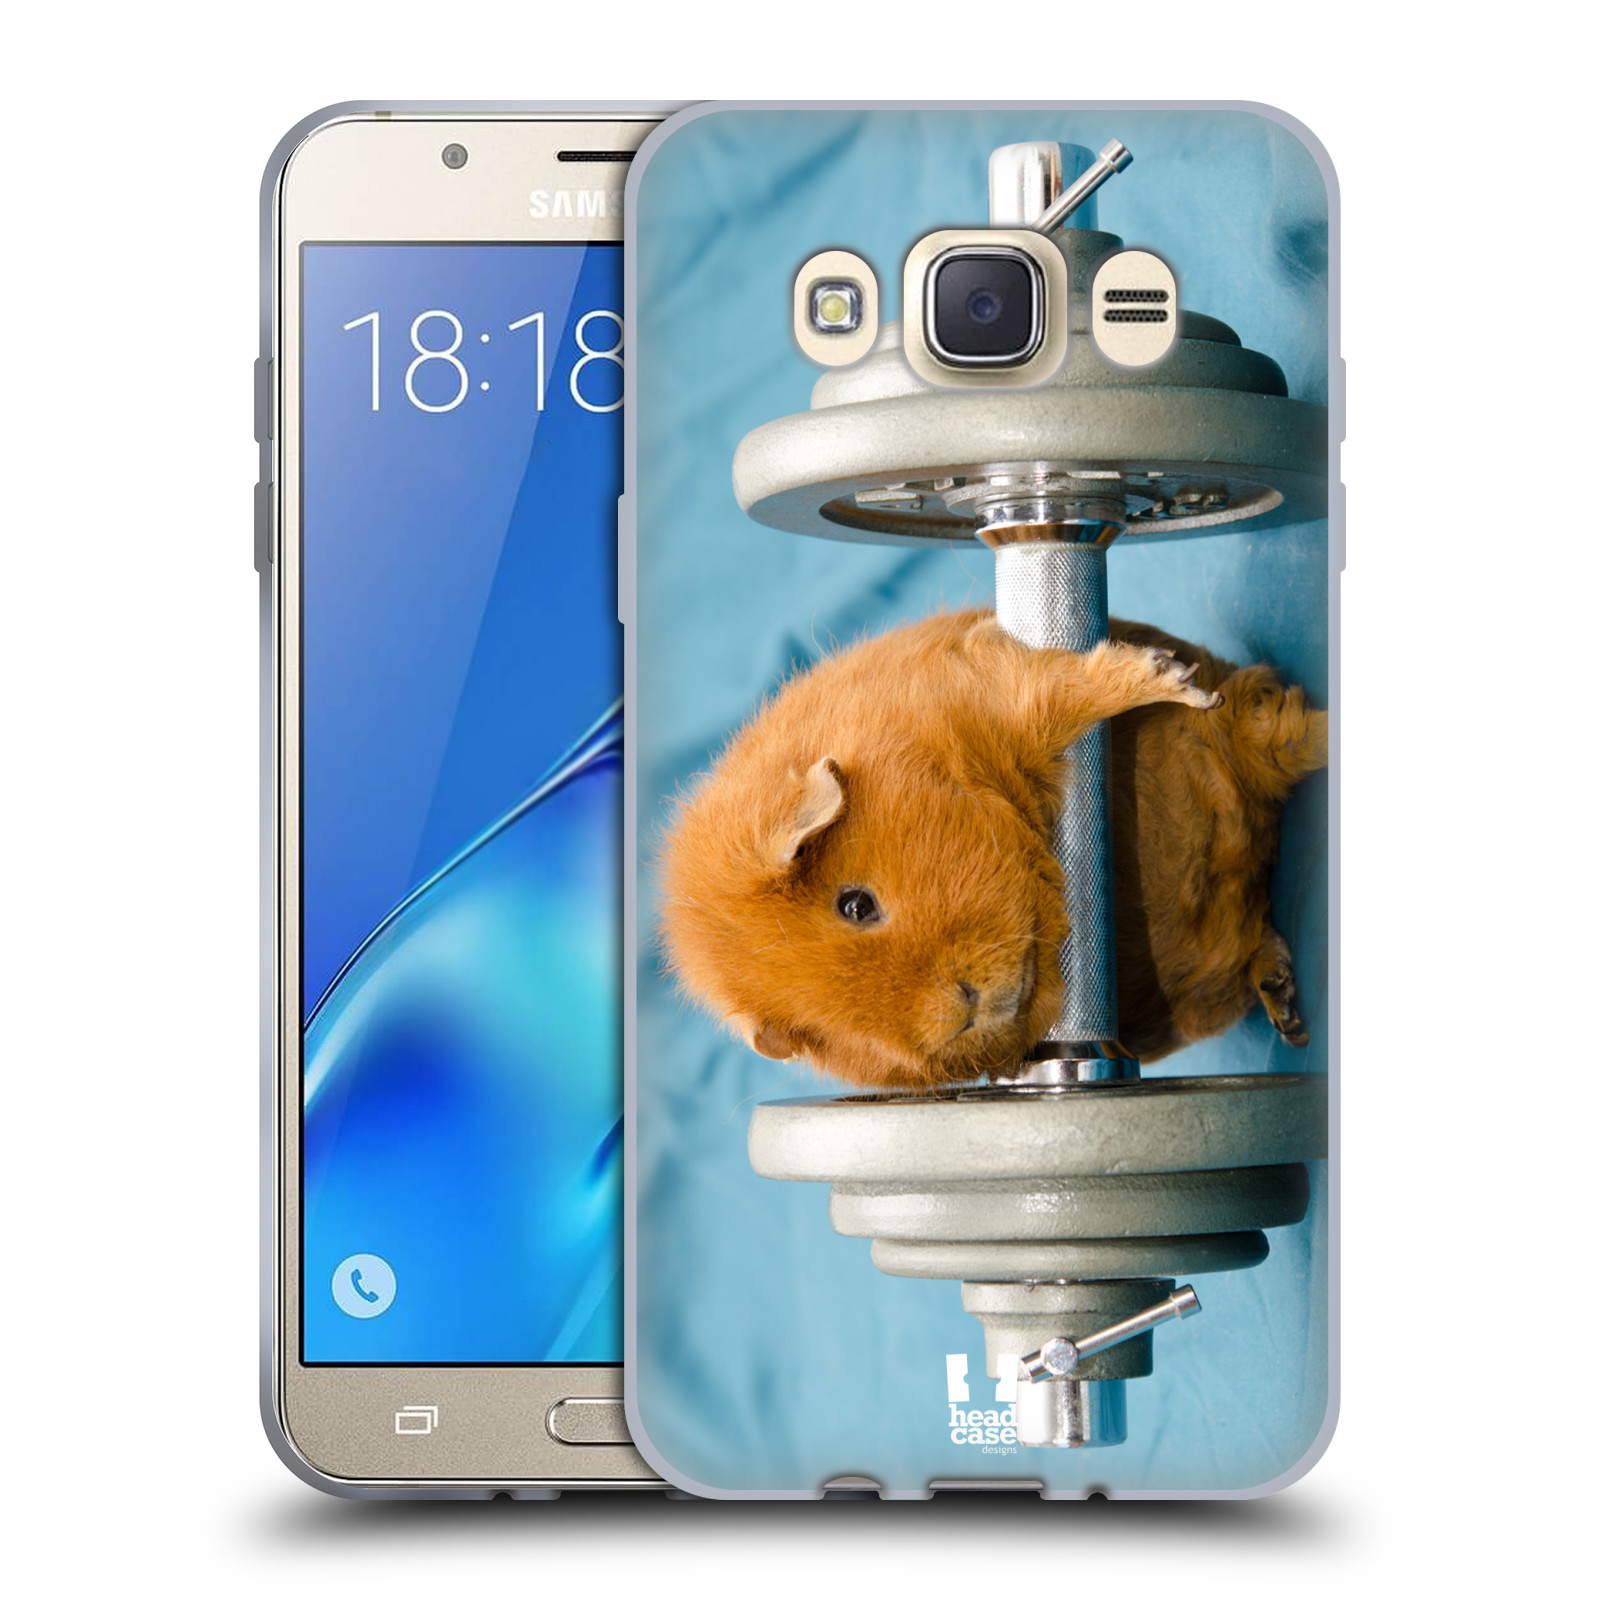 HEAD CASE silikonový obal, kryt na mobil Samsung Galaxy J7 2016 (J710, J710F) vzor Legrační zvířátka křeček/morče silák